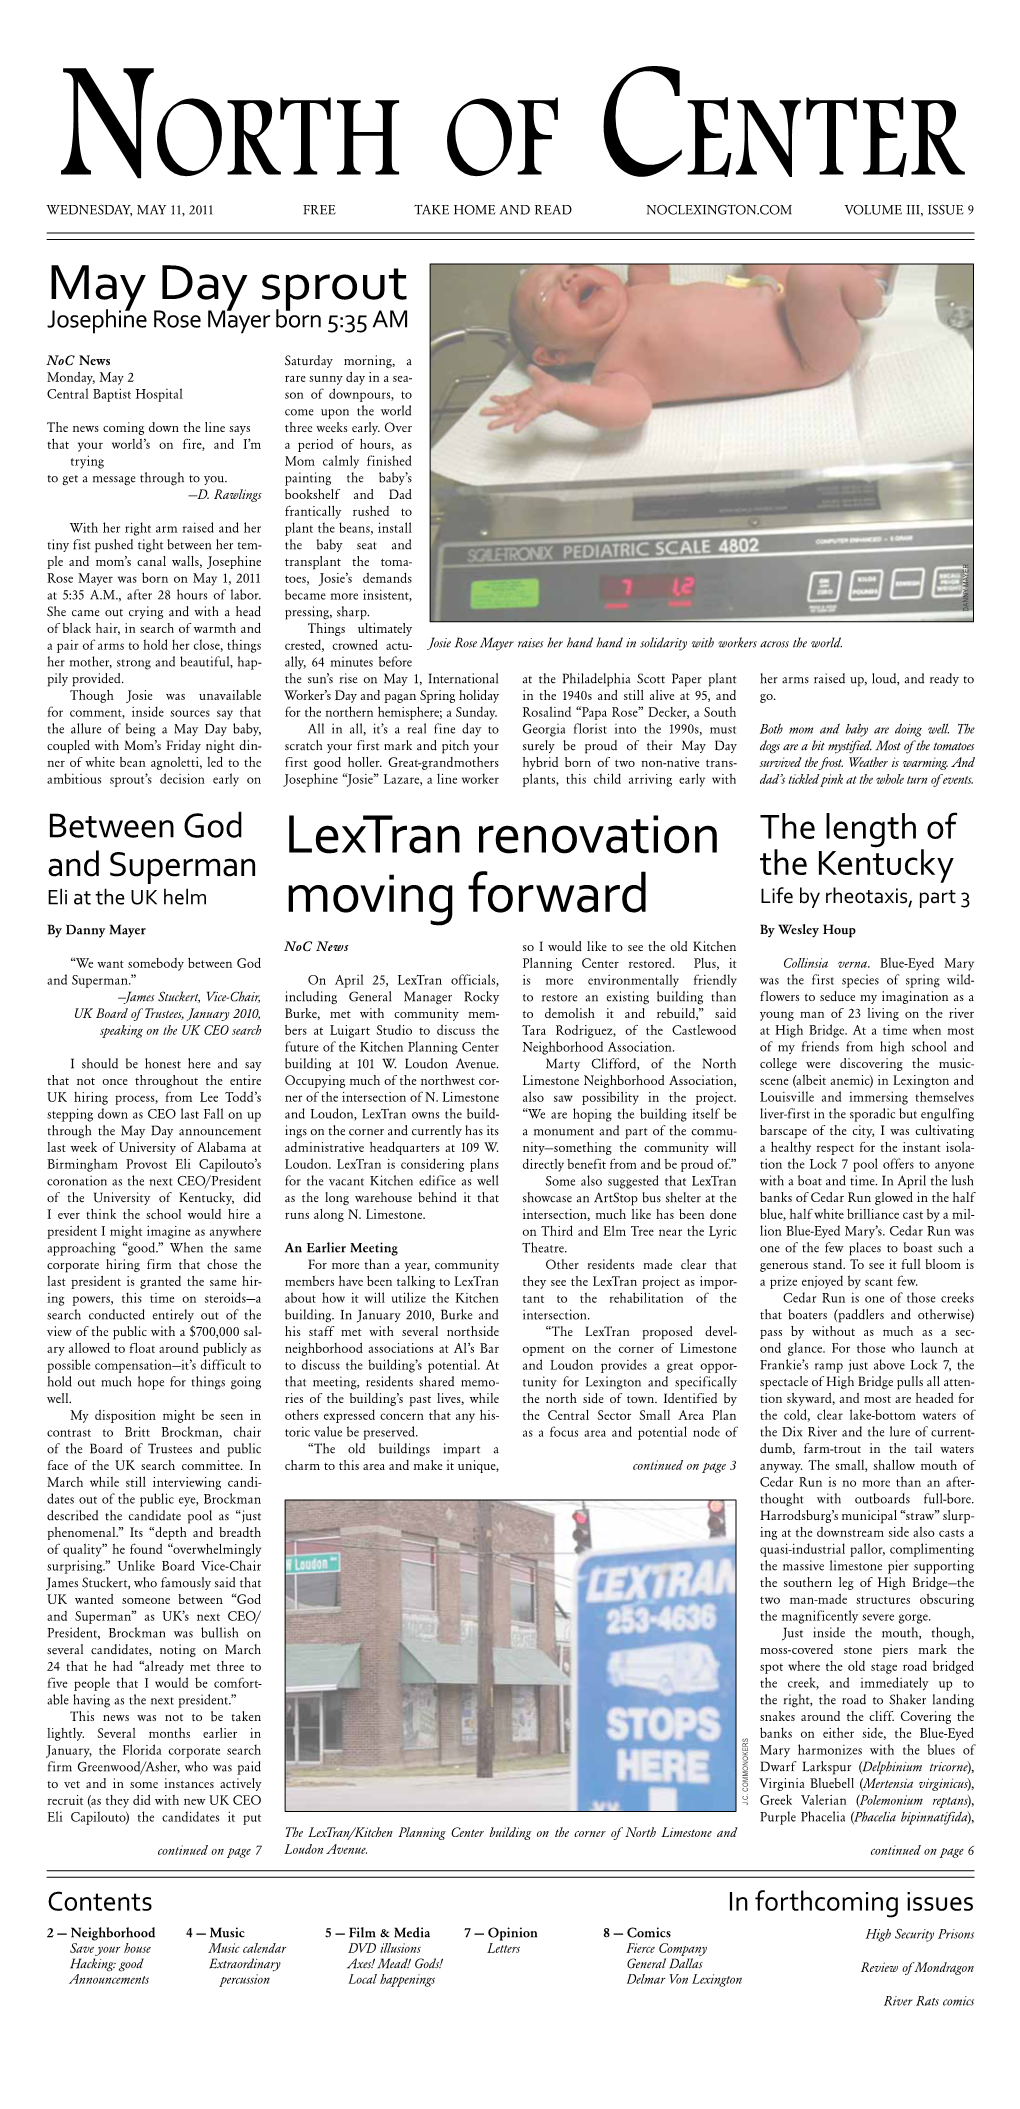 Lextran Renovation Moving Forward